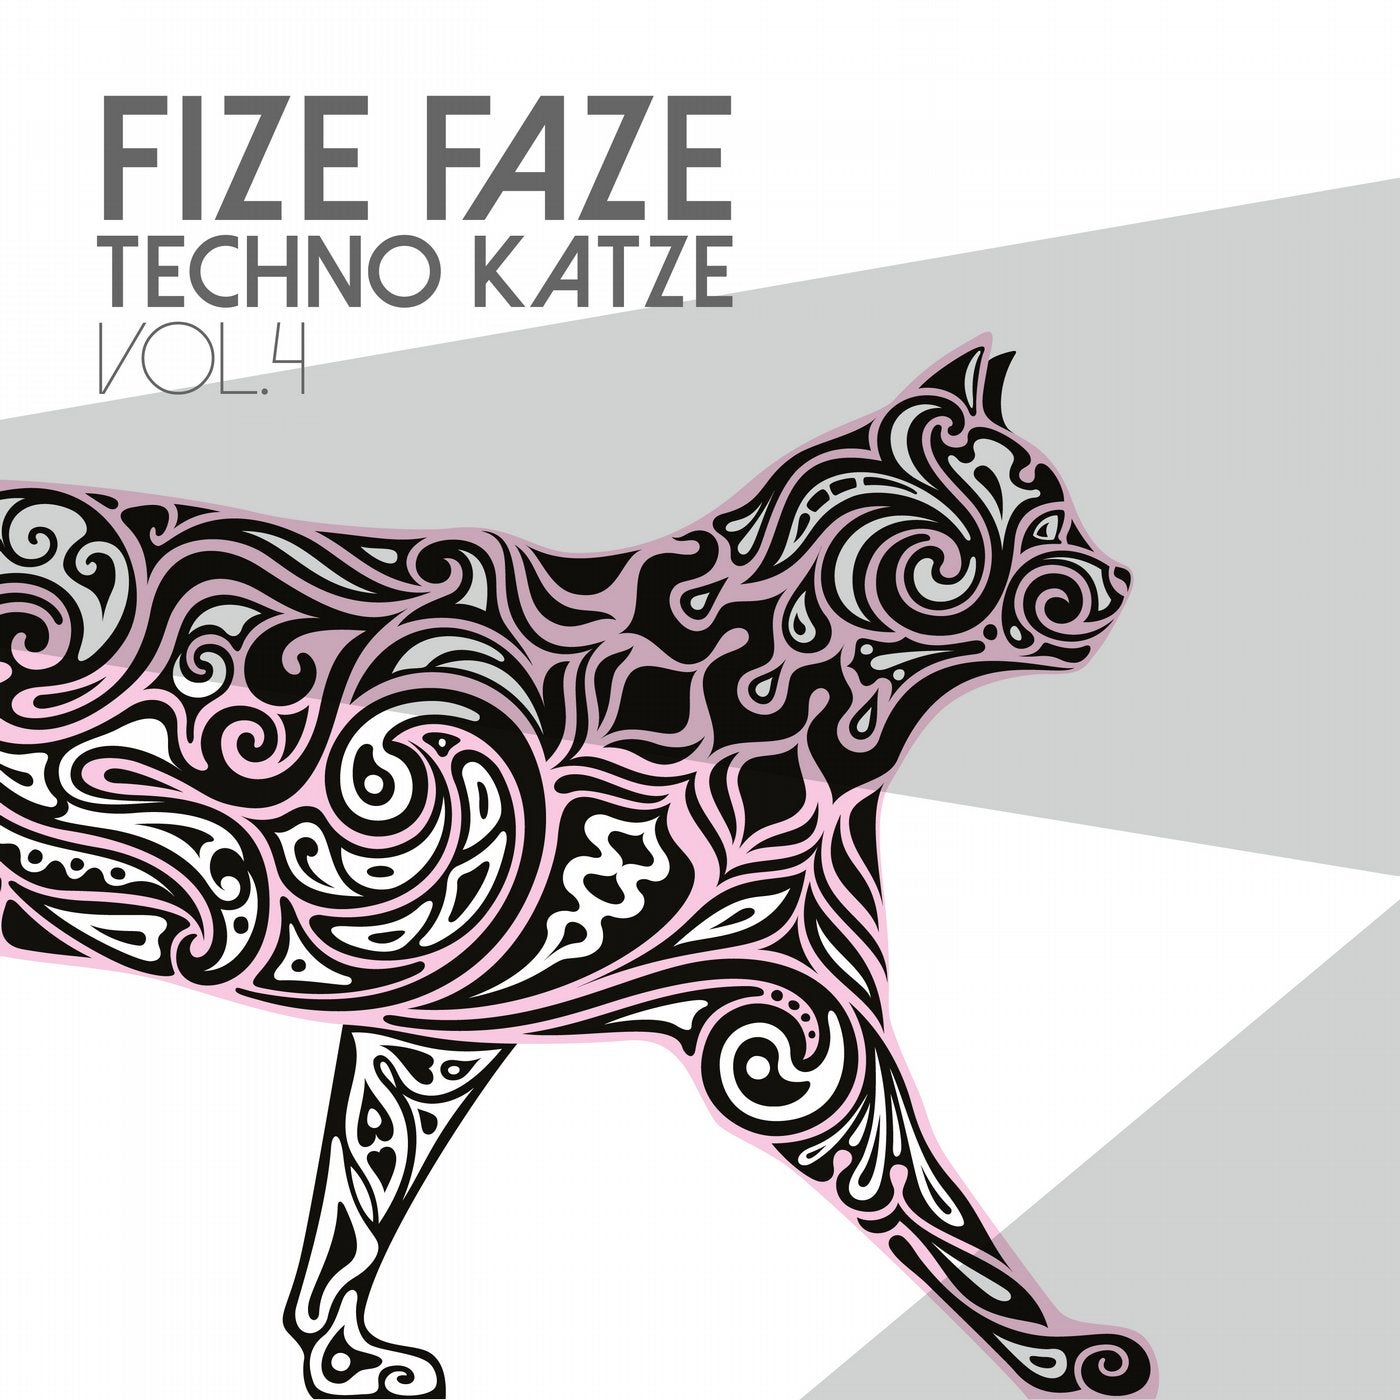 Fize Faze Techno Katze, Vol. 4